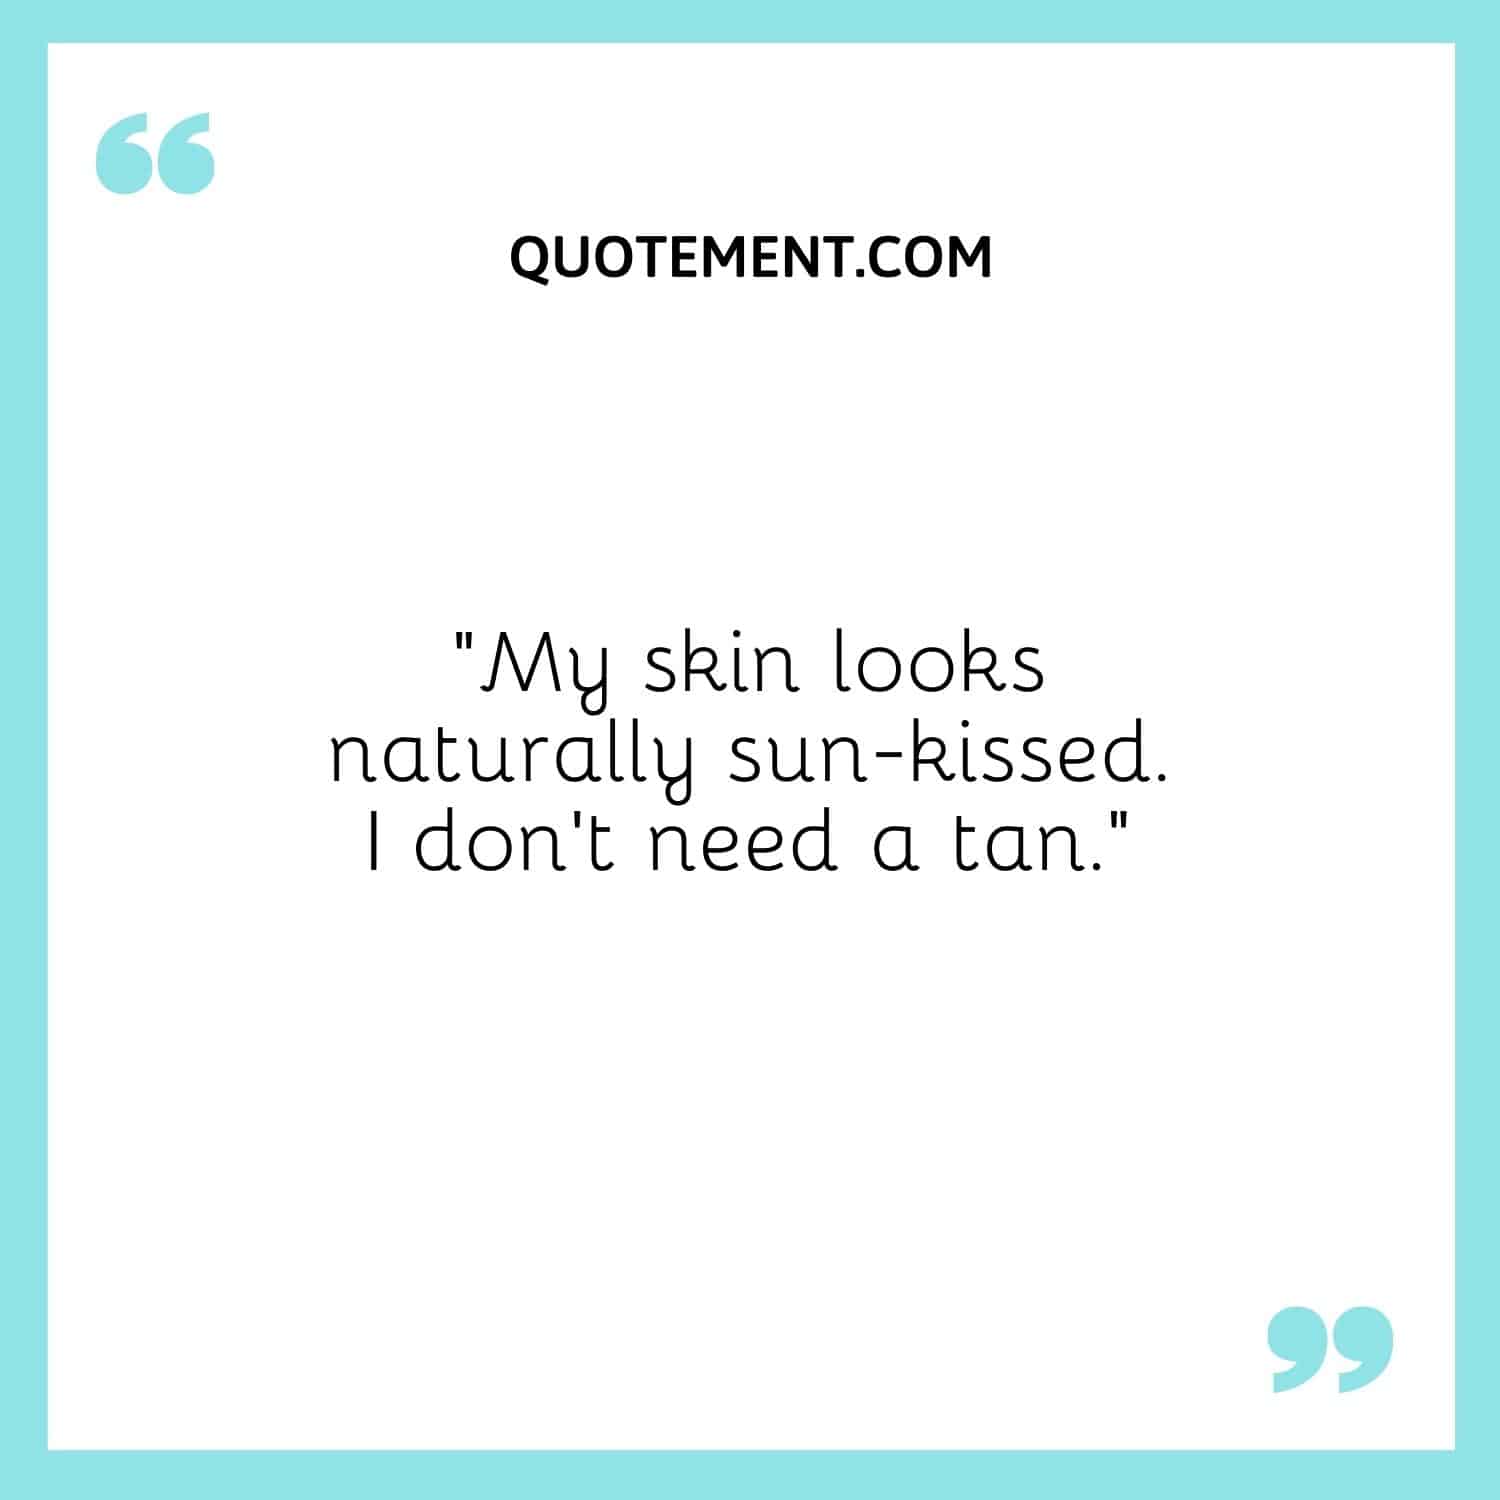 My skin looks naturally sun-kissed